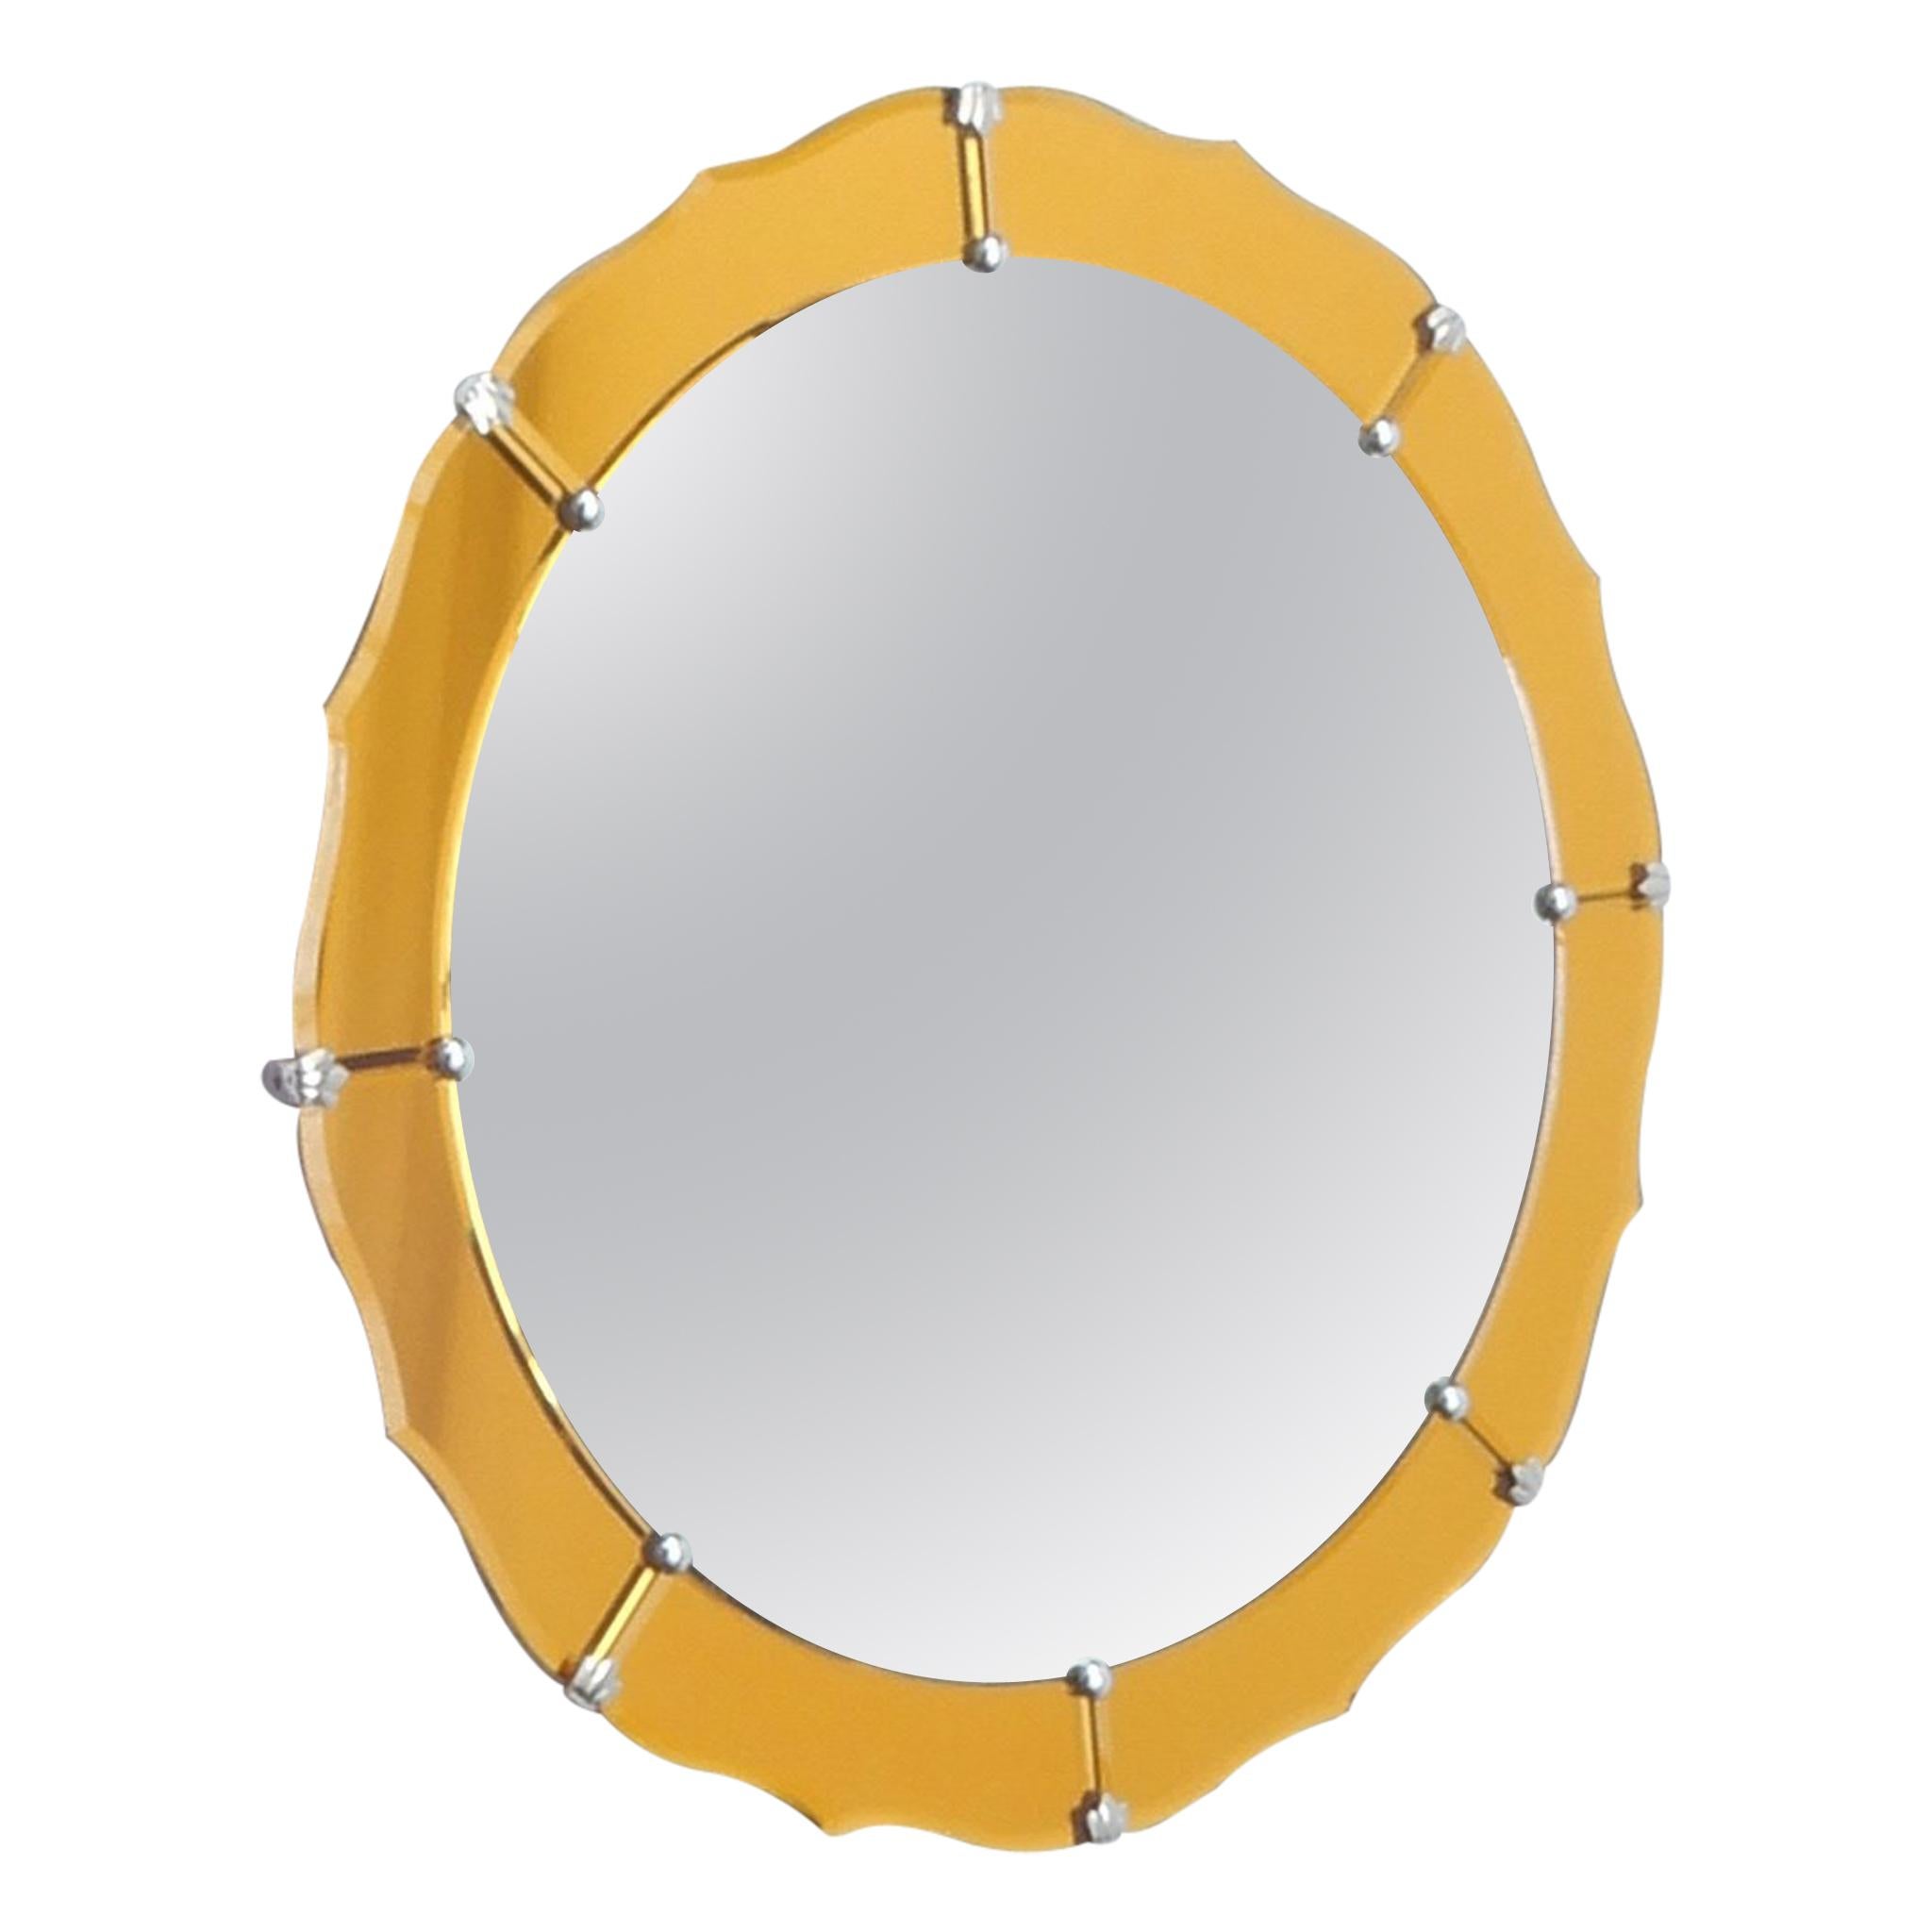 Midcentury Round Mirror with Yellow Orange Frame